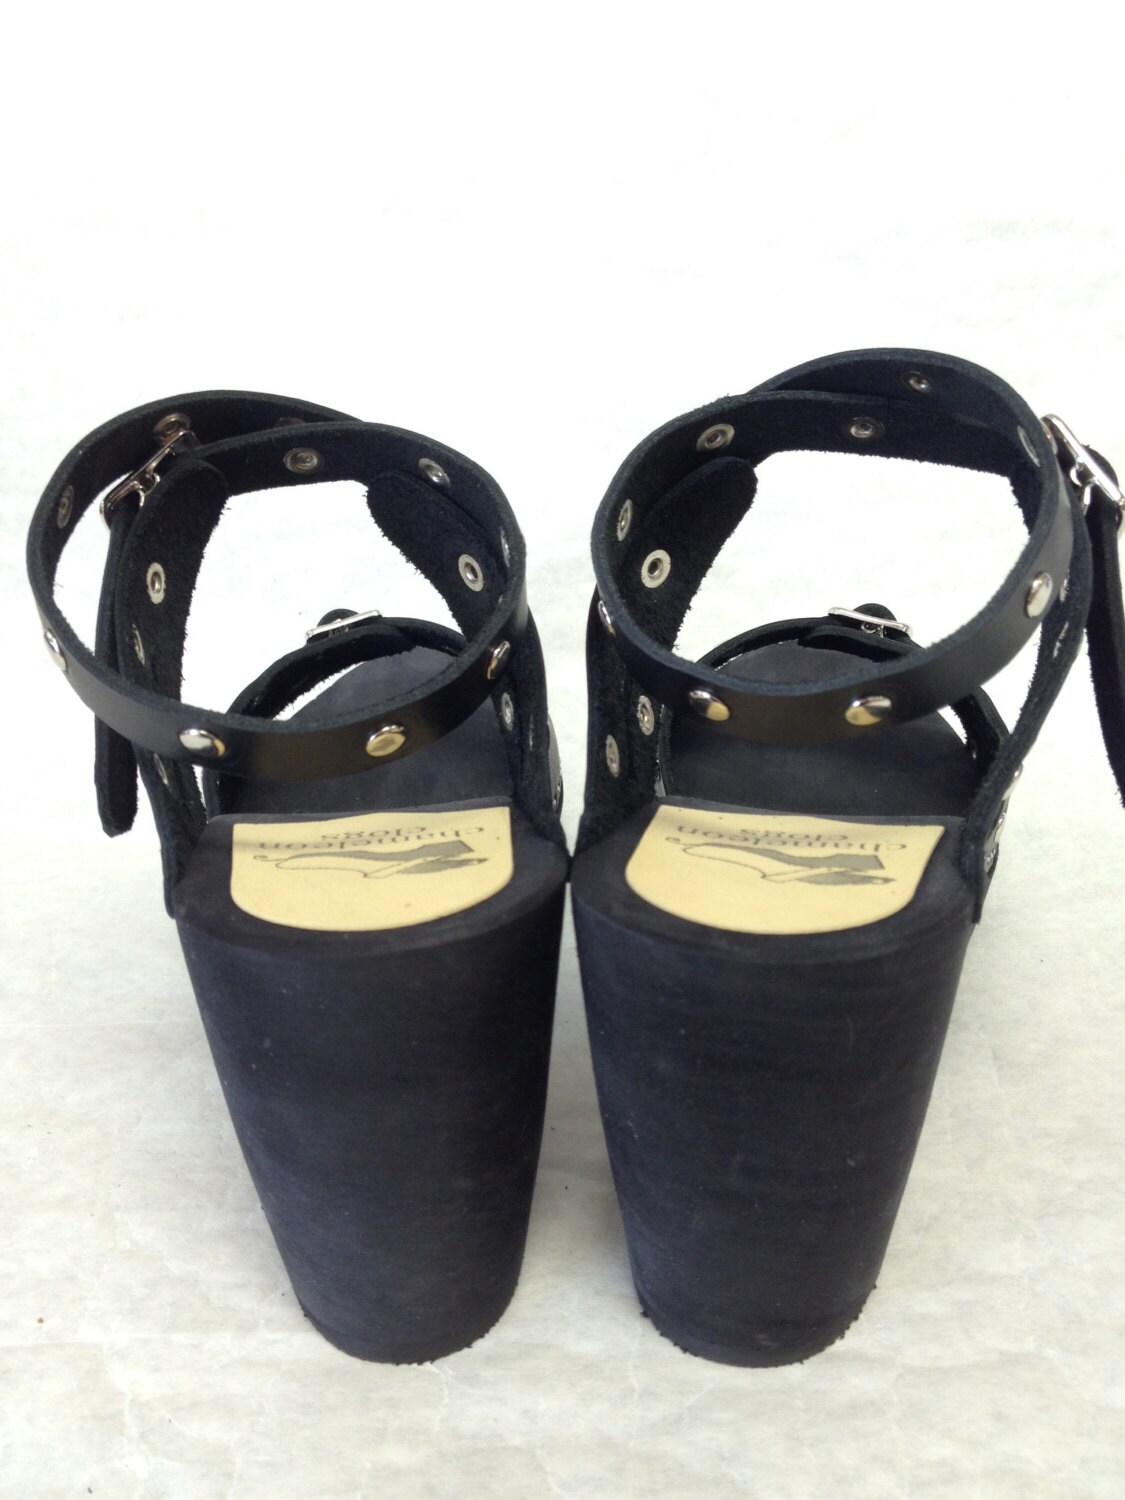 Vera // Black and White Studded Patent Leather Sandal | Etsy